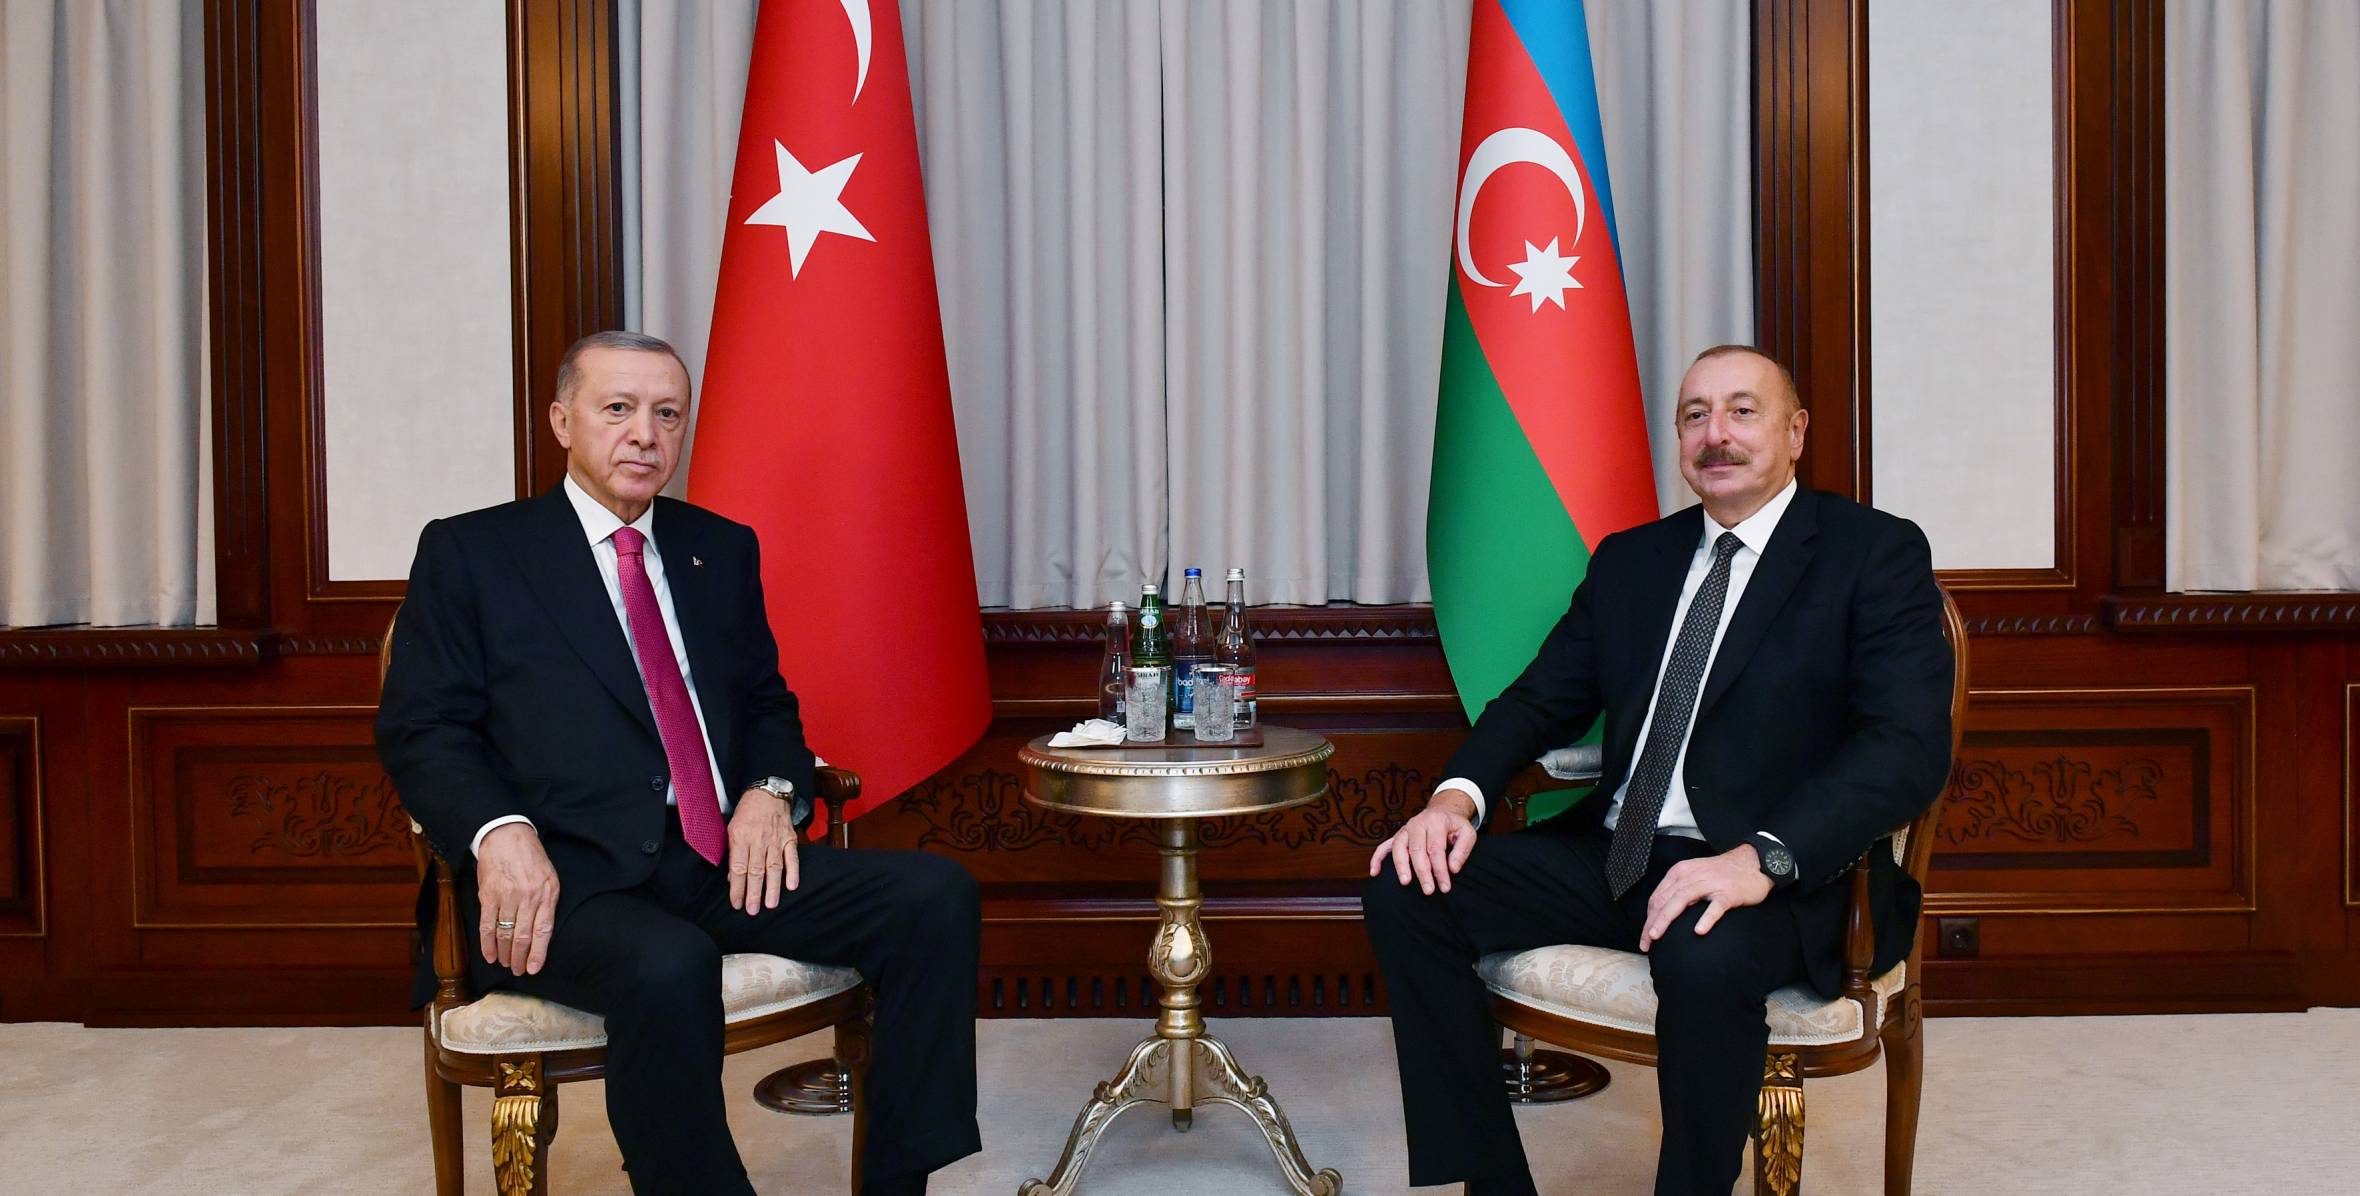 Ilham Aliyev held one-on-one meeting with President of Türkiye Recep Tayyip Erdogan in Nakhchivan